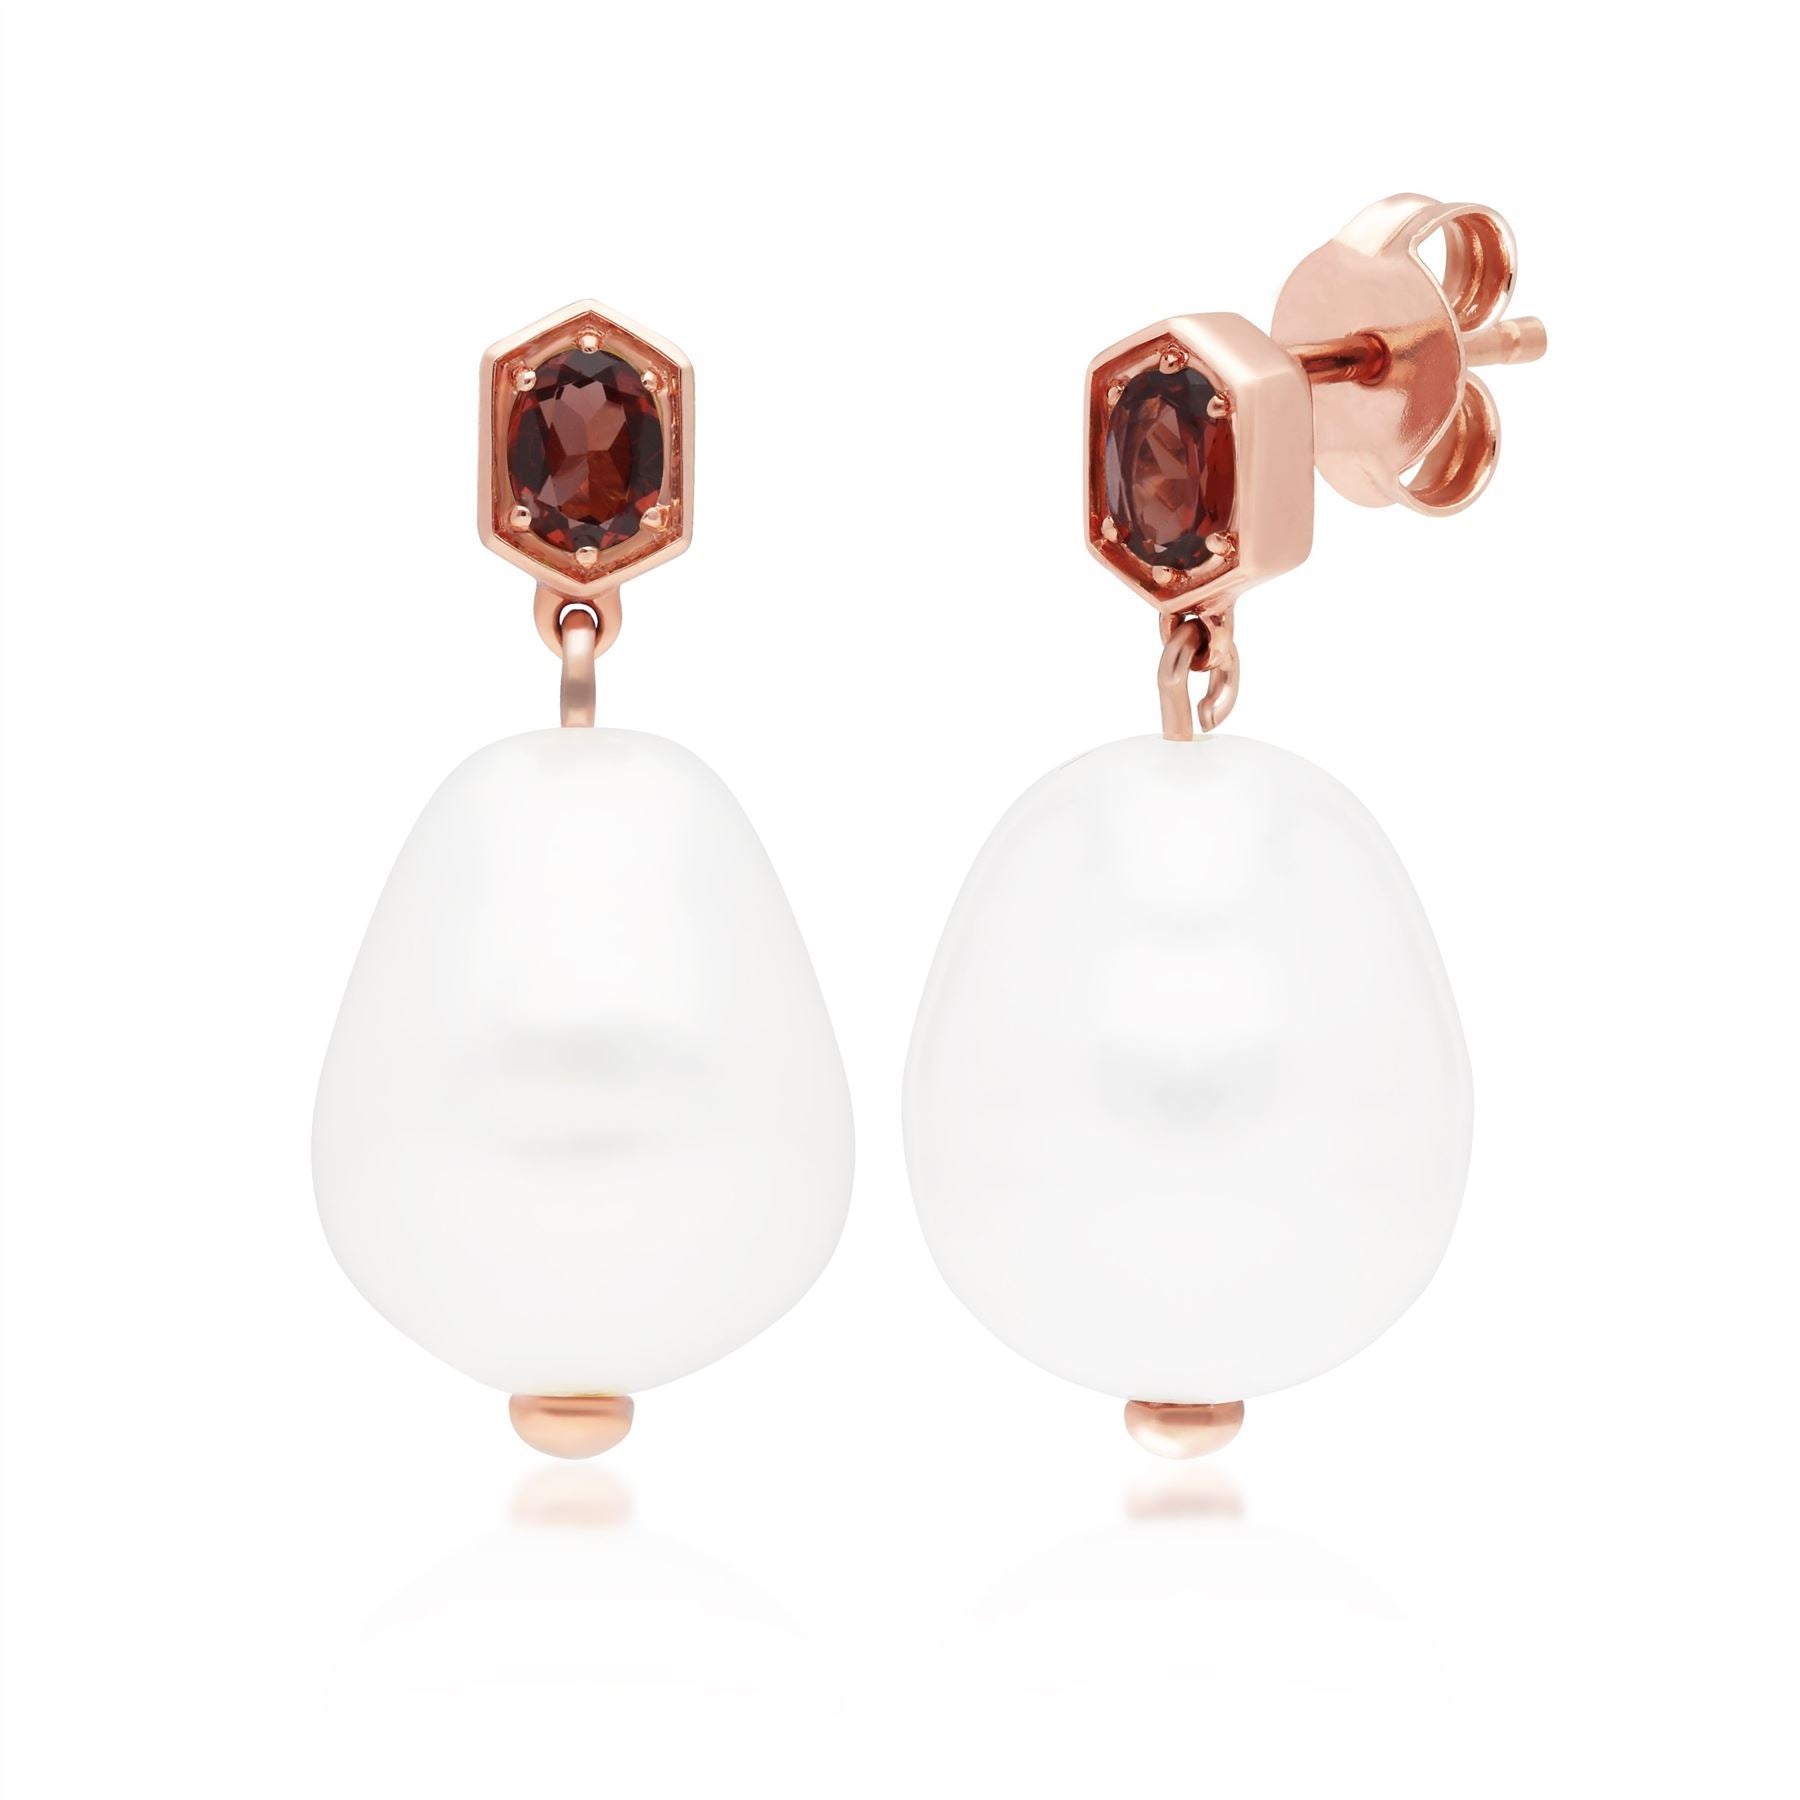 Modern Baroque Pearl & Garnet Drop Earrings in Rose Gold Plated Sterling Silver